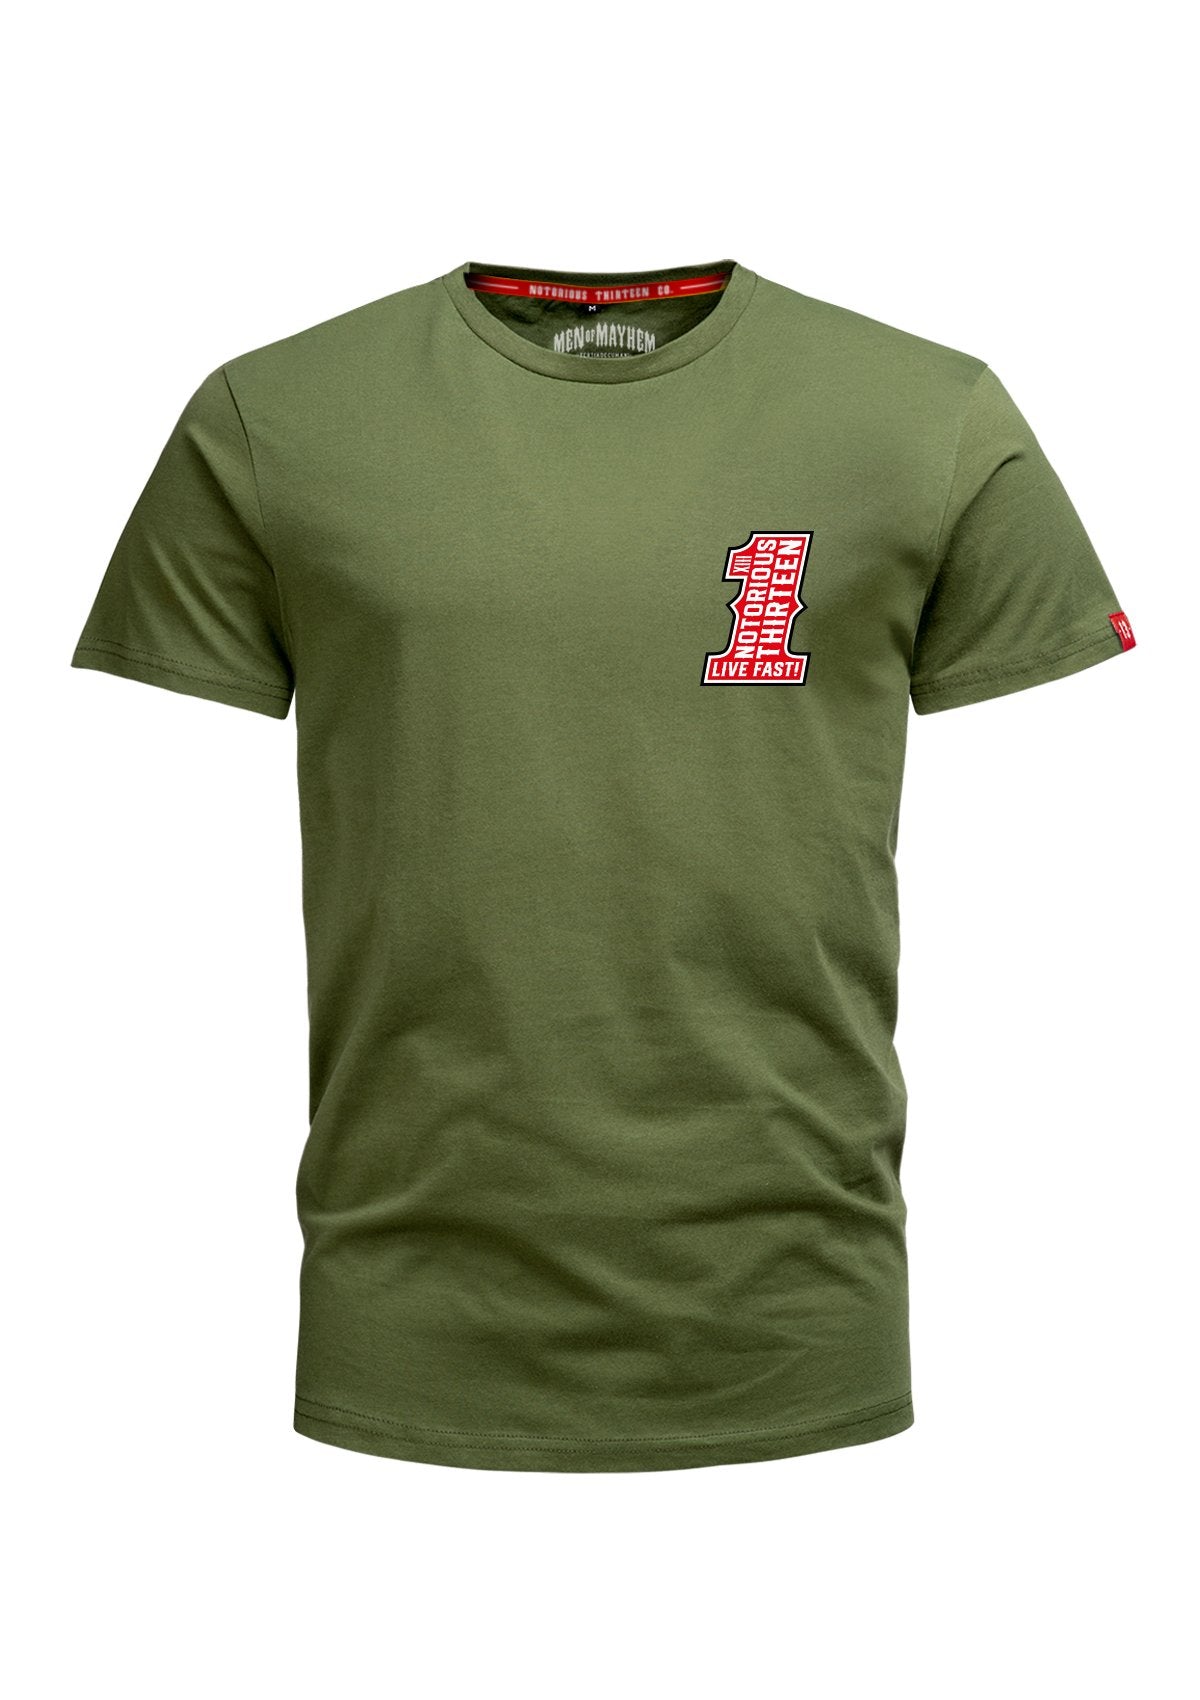 T-Shirt ONE O/R/W - MEN OF MAYHEM - ALAIKO-EXCHANGES-MM-M-1010-TO-ORW - Men - Oliv